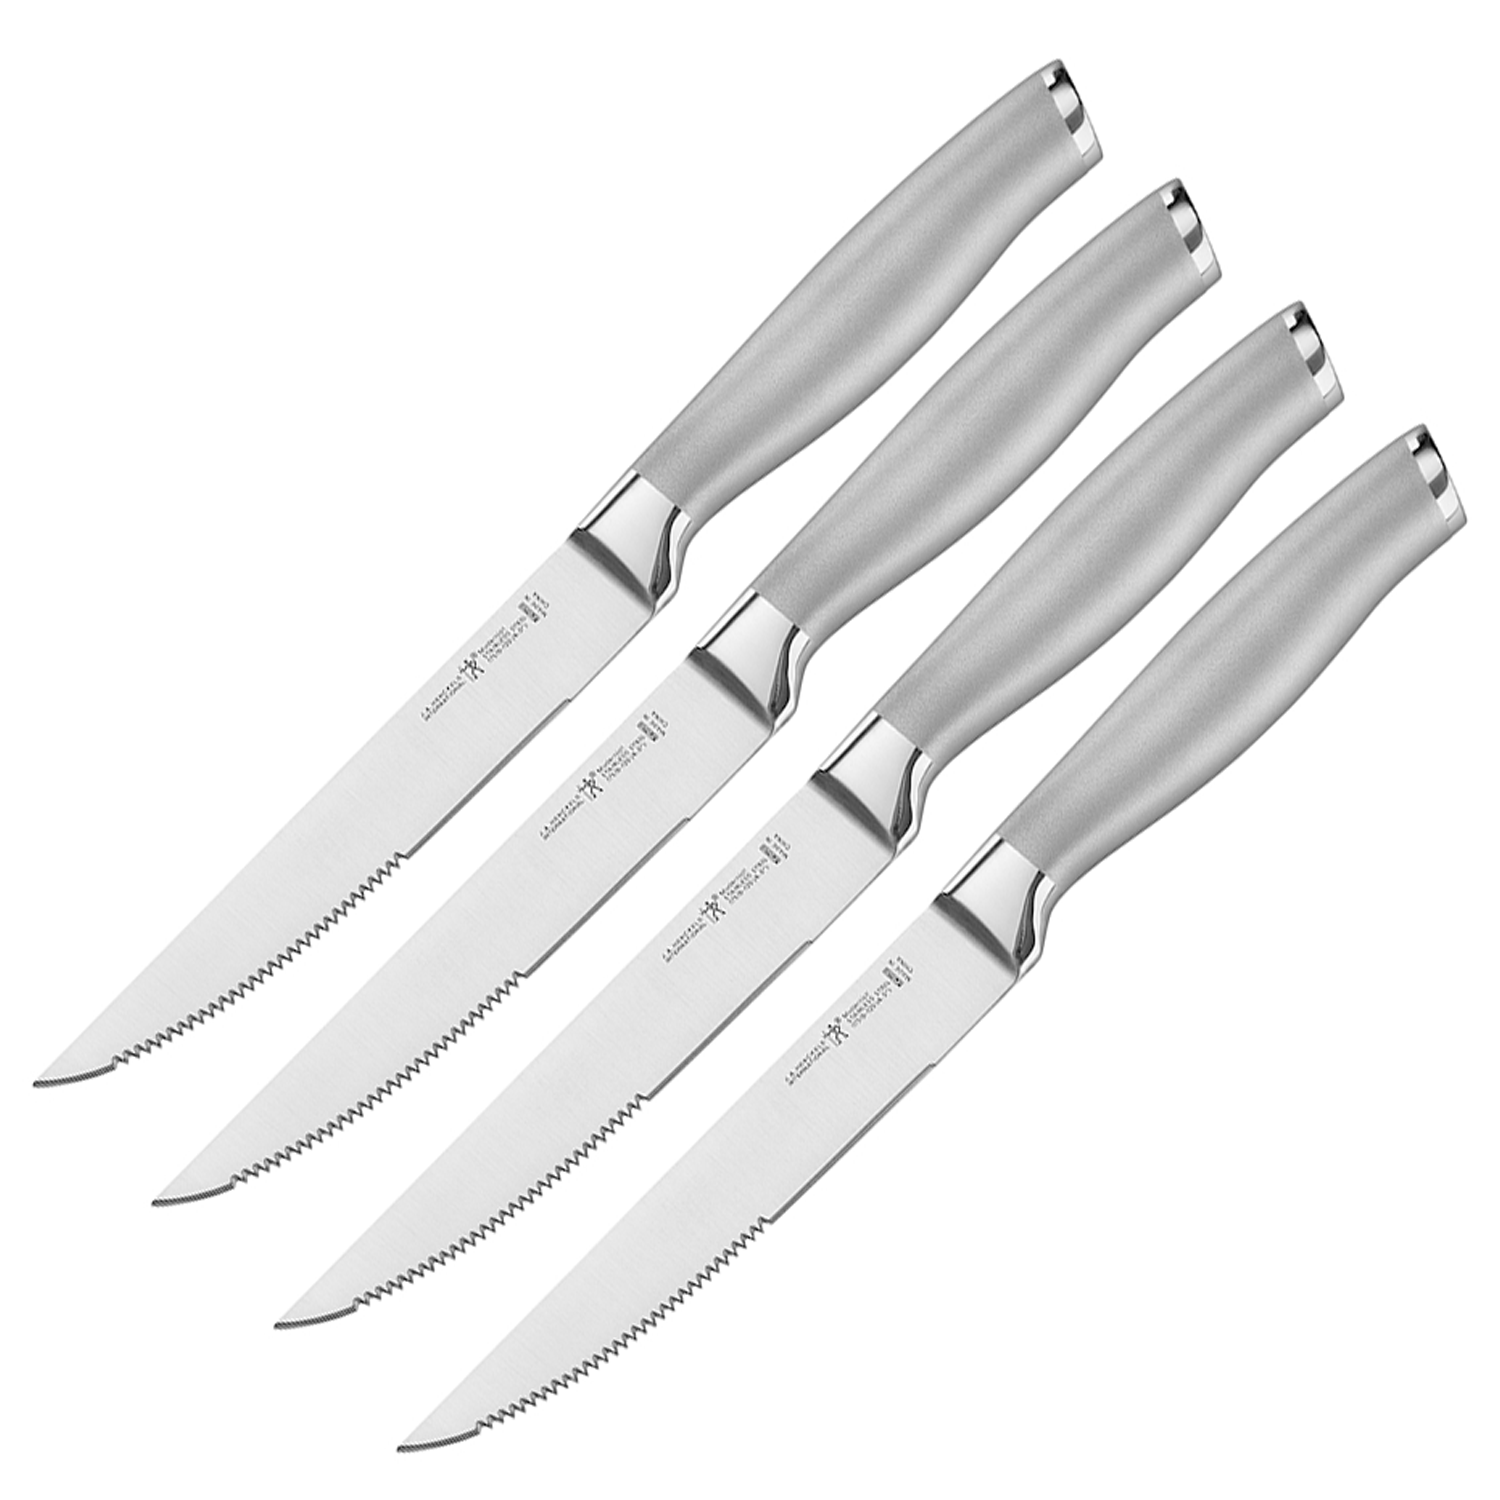 Oneida 4 piece stainless steel steak knife set